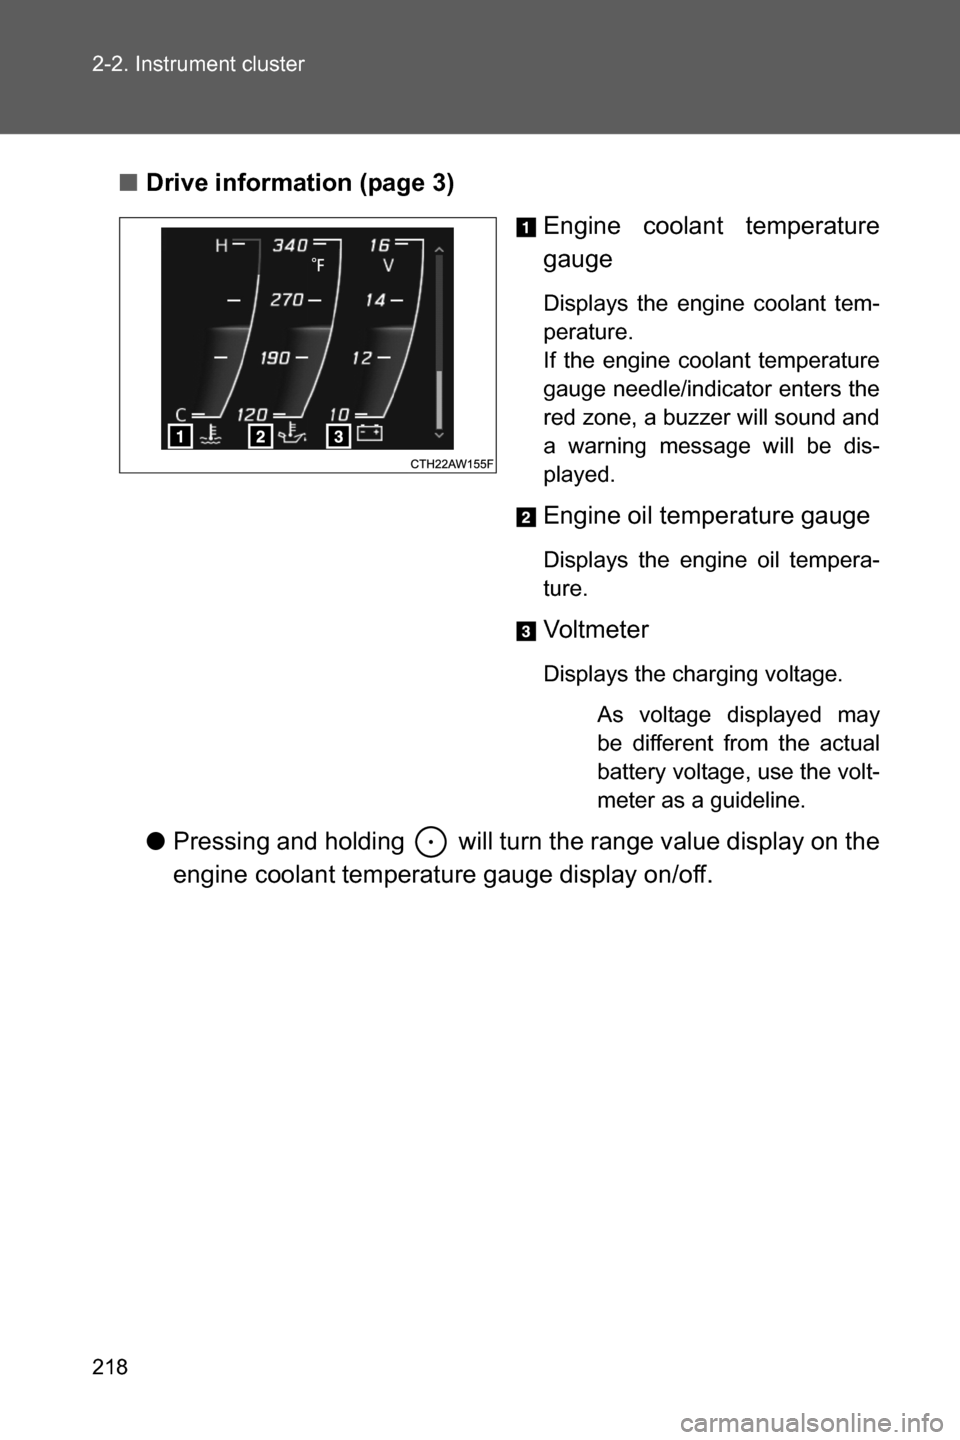 SUBARU BRZ 2017 1.G User Guide 218 2-2. Instrument cluster
■Drive information (page 3)
Engine coolant temperature
gauge
Displays the engine coolant tem-
perature. 
If the engine coolant temperature
gauge needle/indicator enters t